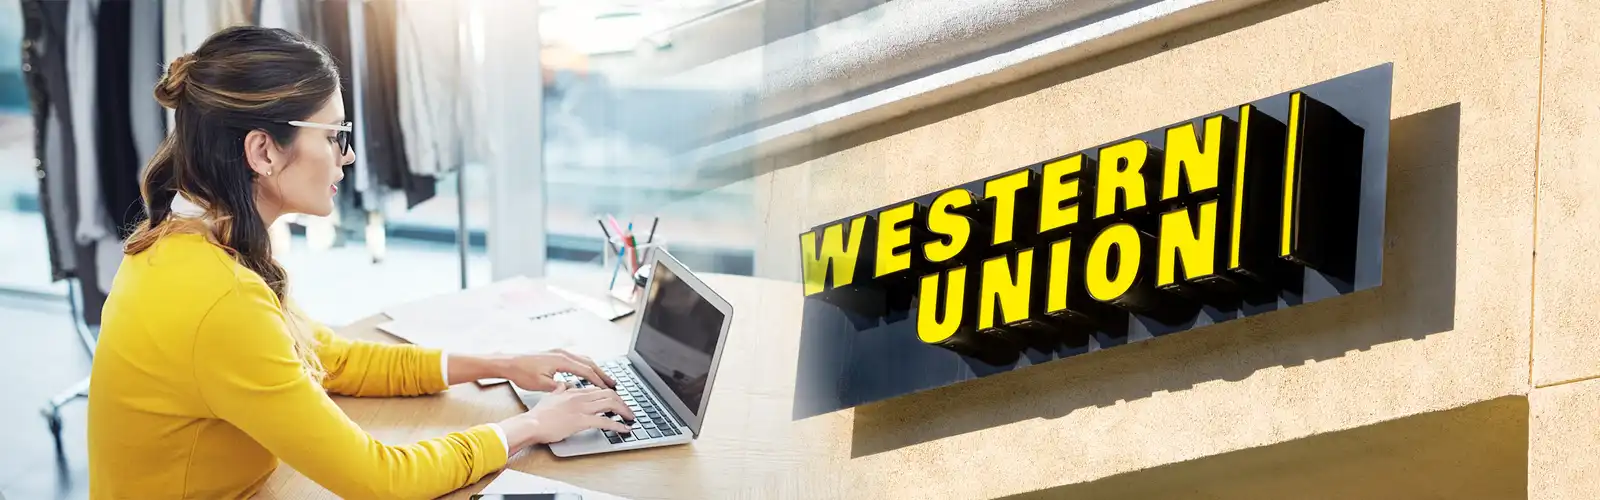 Western-Union-Customer-Service